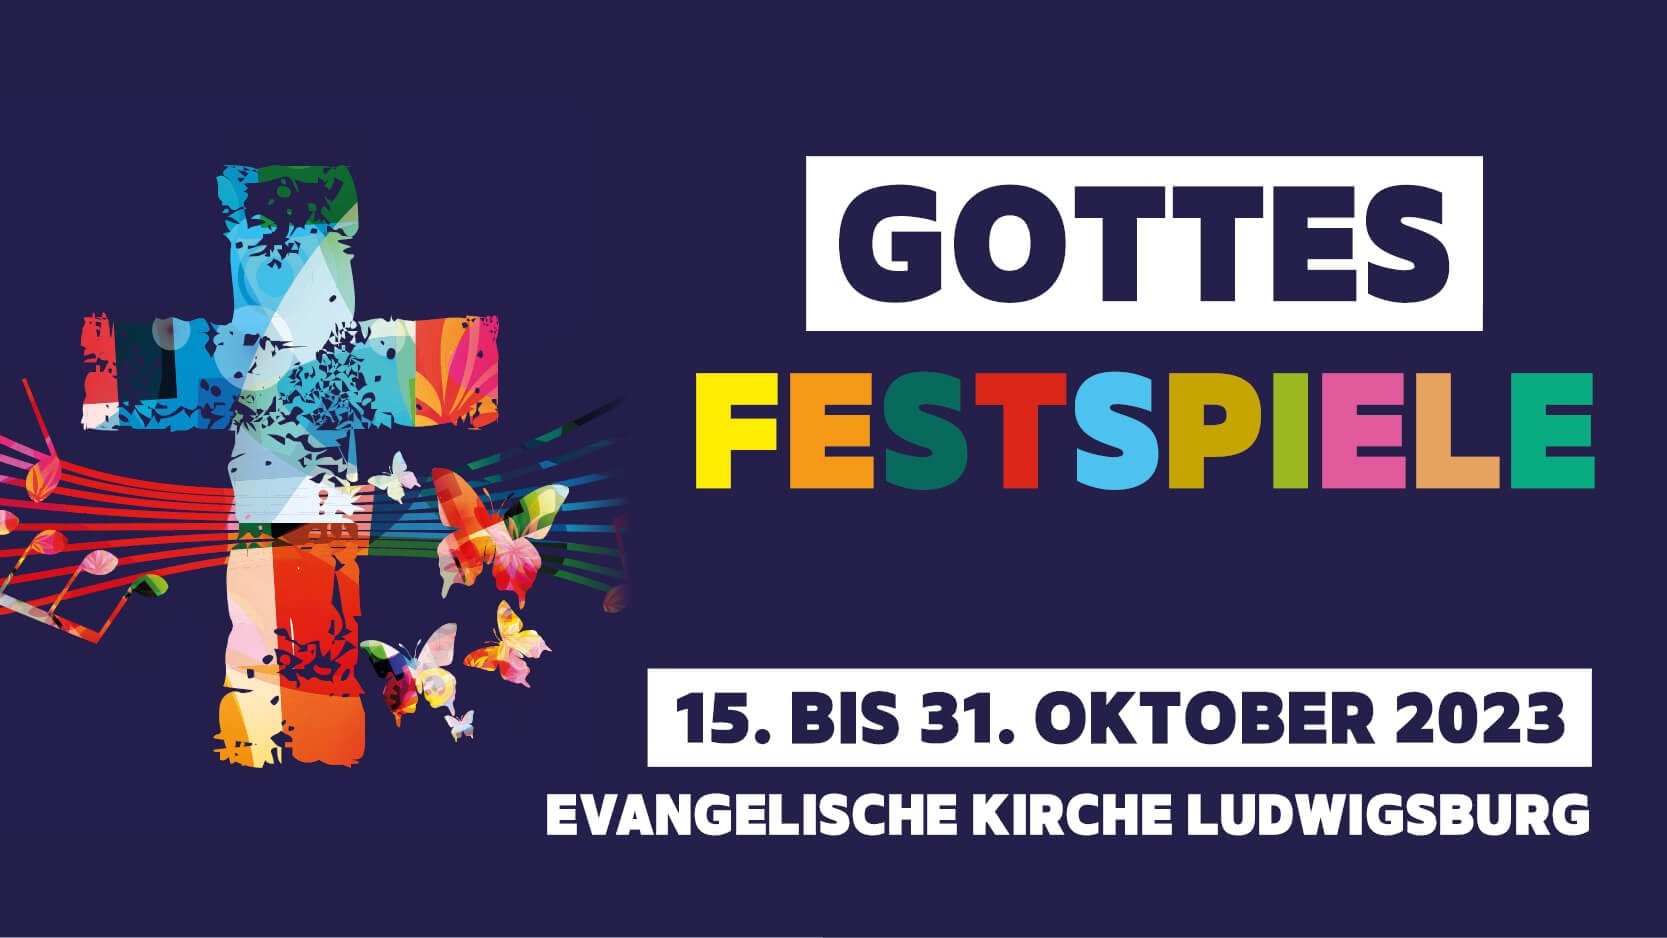 Gottesfestspiele 2023 Ludwigsburg